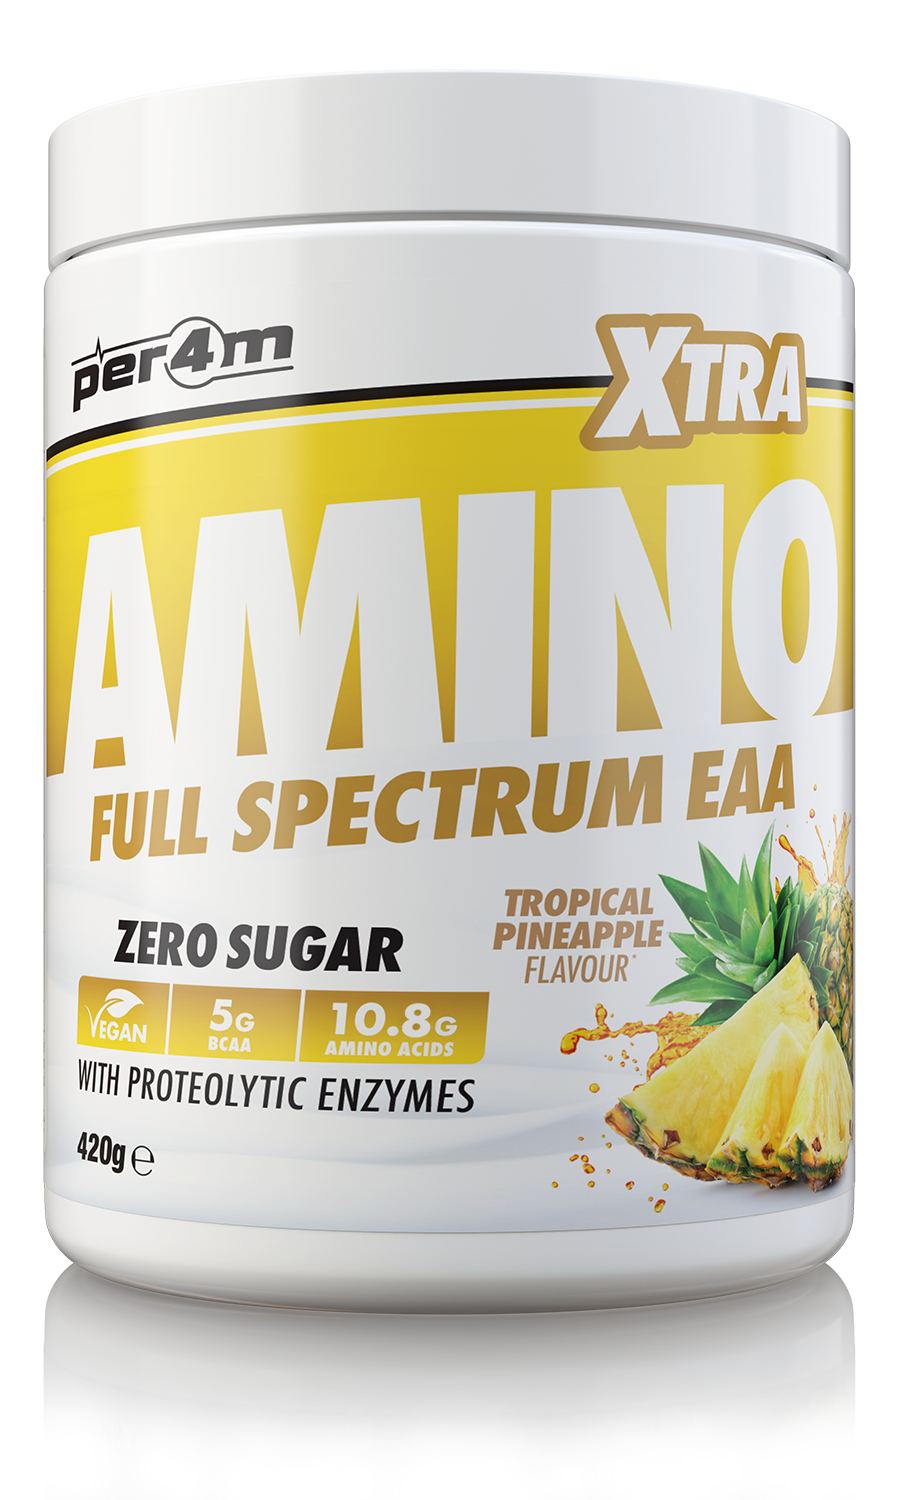 Amino Xtra Essential - 700 gr